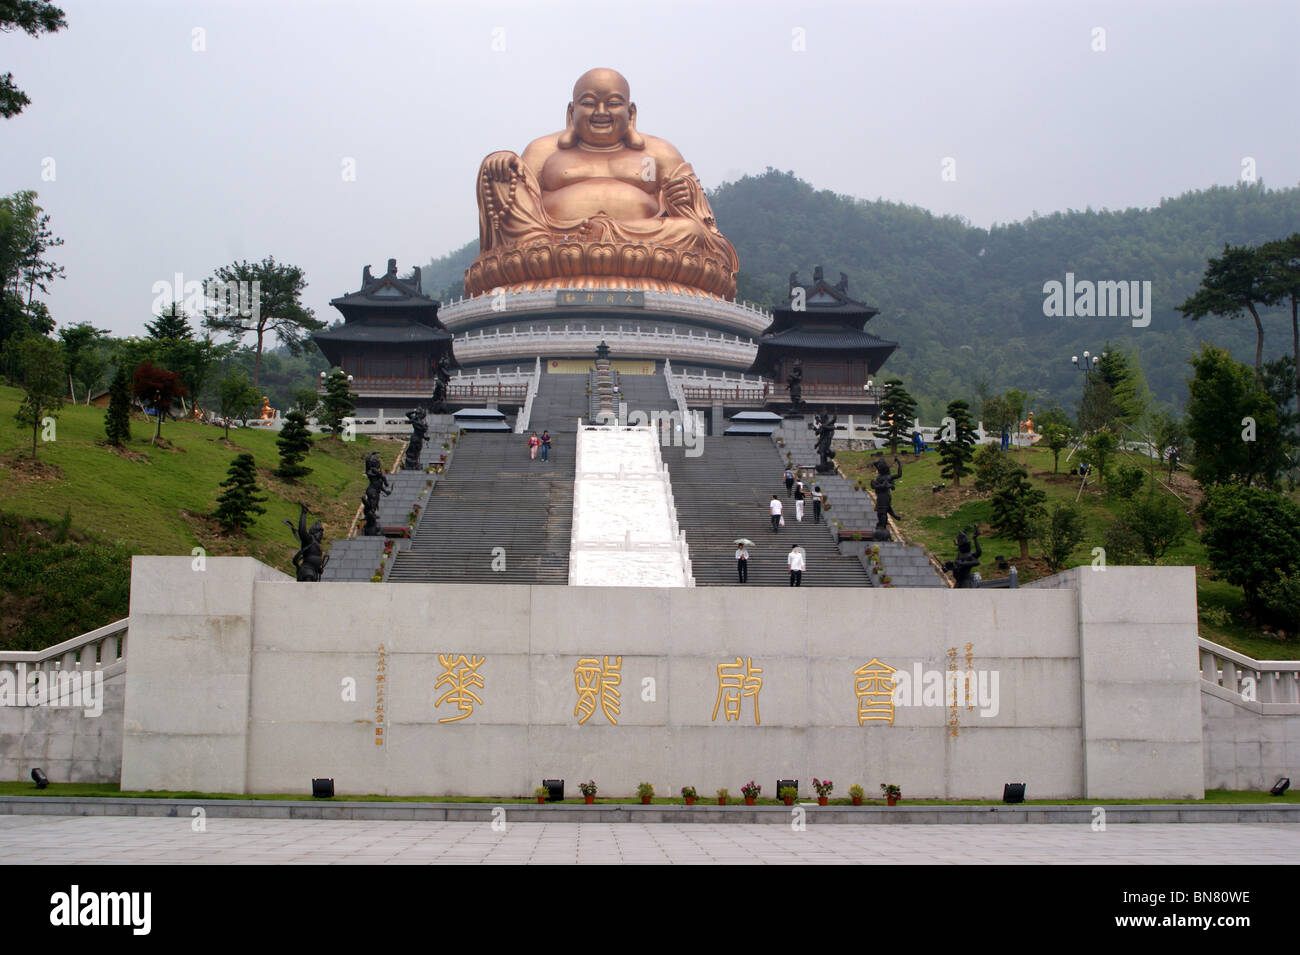 Statua di Buddha Maitreya, Xuedou tempio buddista, Xikou, Zheijang provincia, Cina Foto Stock